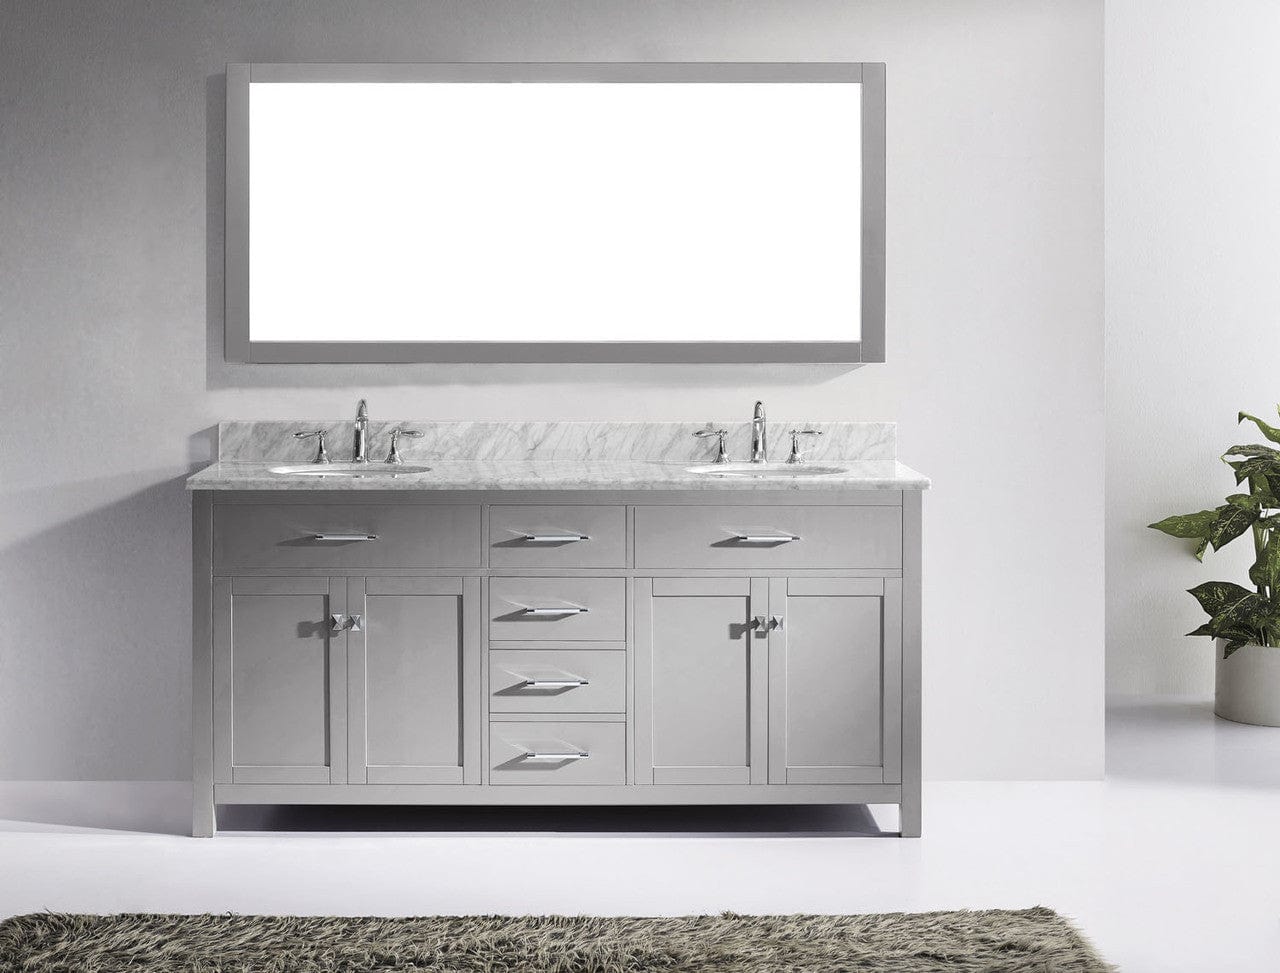 Virtu USA Caroline 72 Double Bathroom Vanity in Cashmere Grey w/ Marble Top & Round Sink w/ Mirror